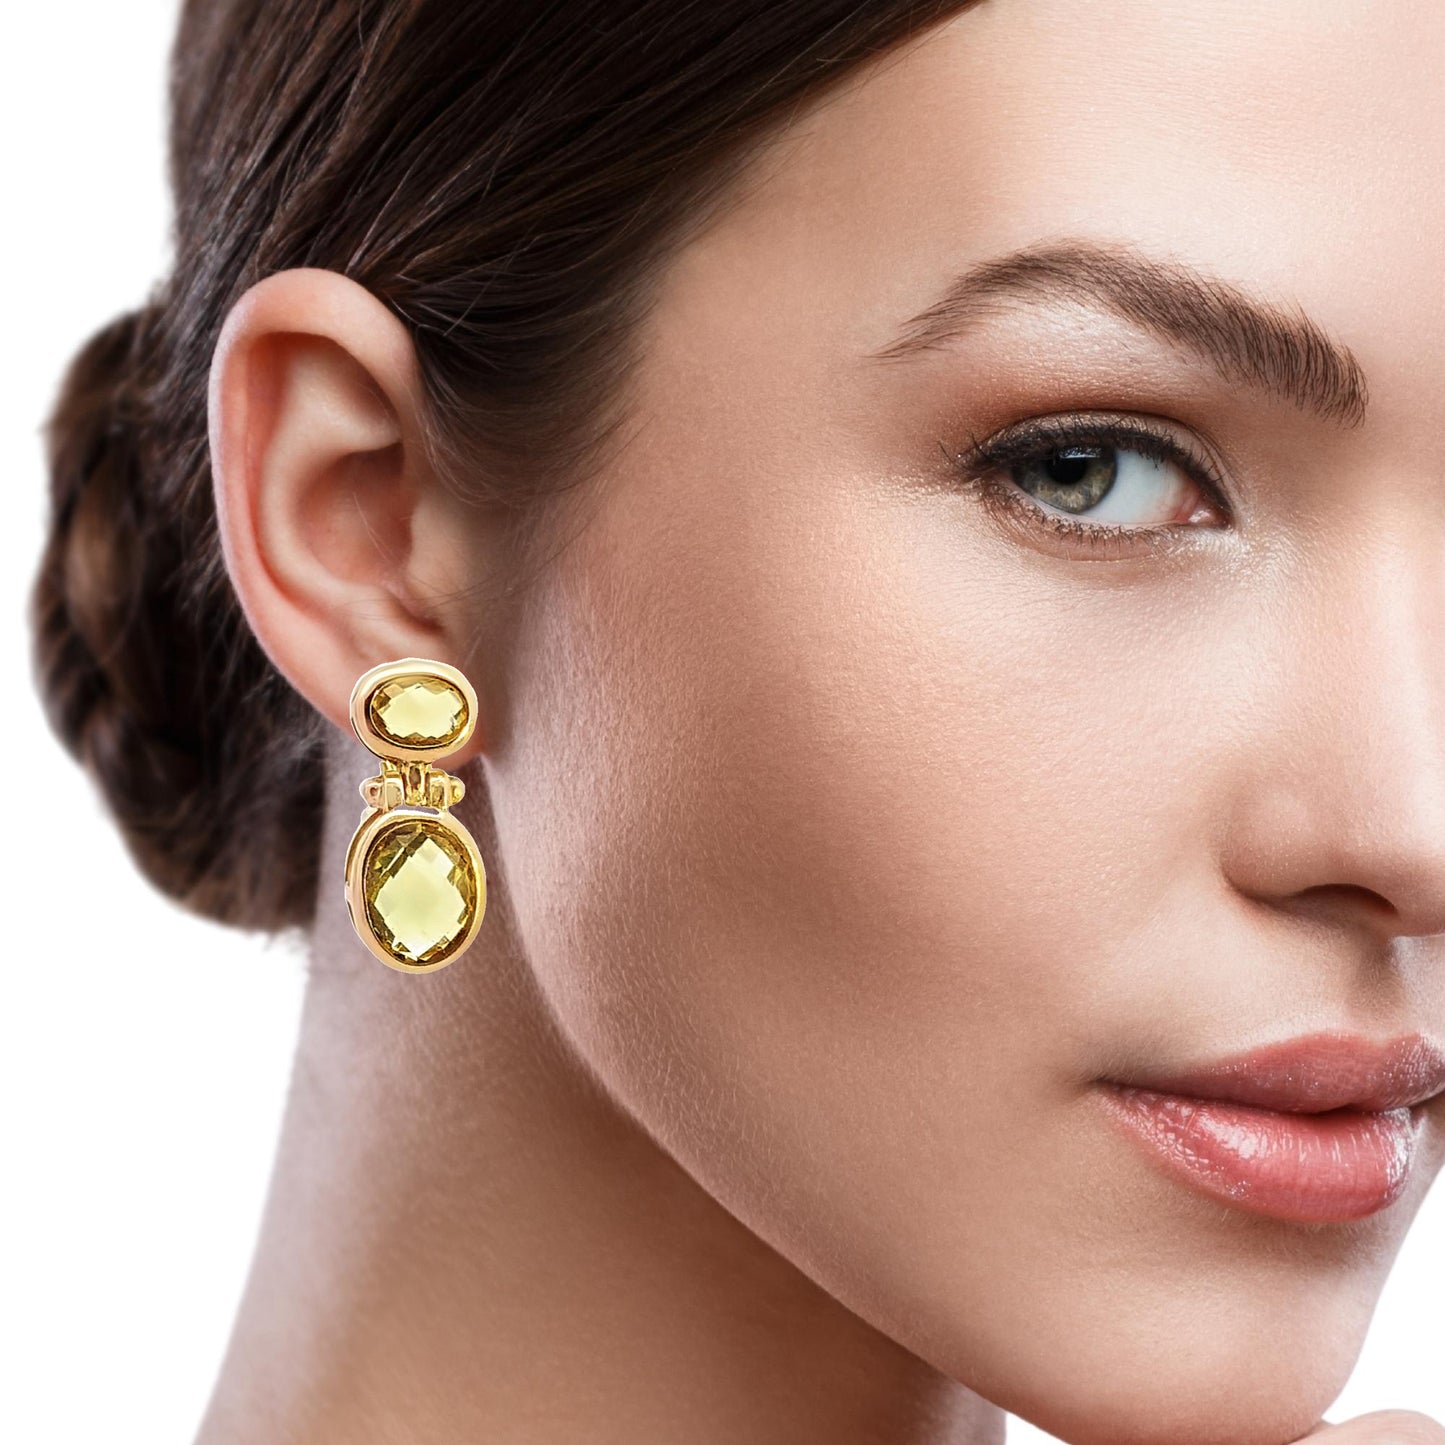 Classic 14K Yellow Gold Peridot Clip-On Earrings